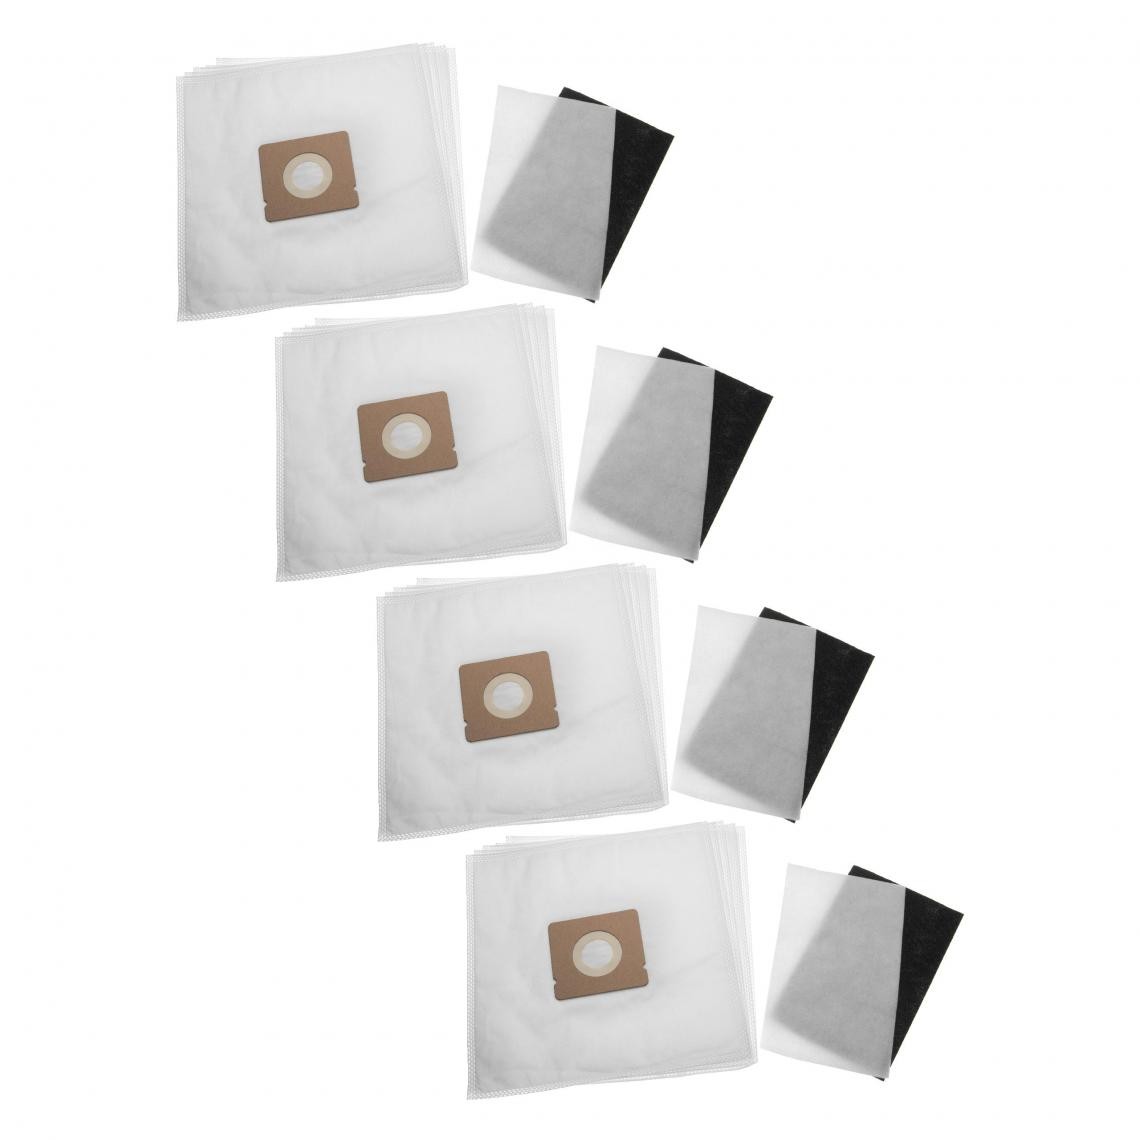 Vhbw - vhbw Lot de sacs (microfibres non tissées) + filtre avec 24 pièces compatible avec Moulinex MO153301/4Q0, MO153601/4Q0, MO154101/4Q0 aspirateur - Accessoire entretien des sols